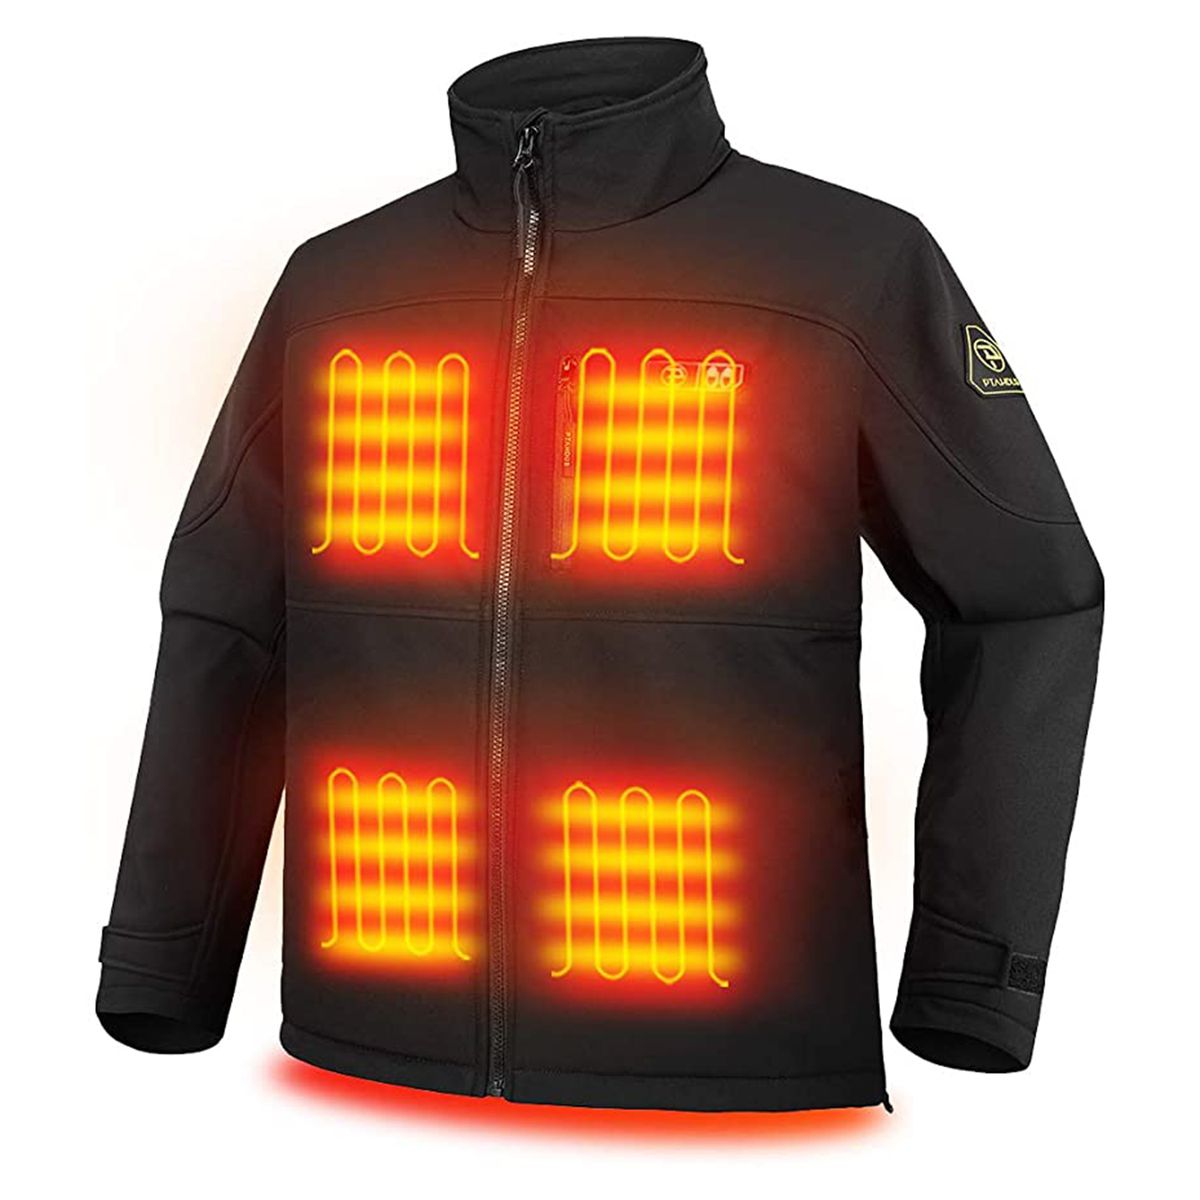 BIKETAFUWY Heated Jacket for Men Electric Heating Winter Warm Down Coat Smart USB Charger Waterproof Rechargeable Sport 